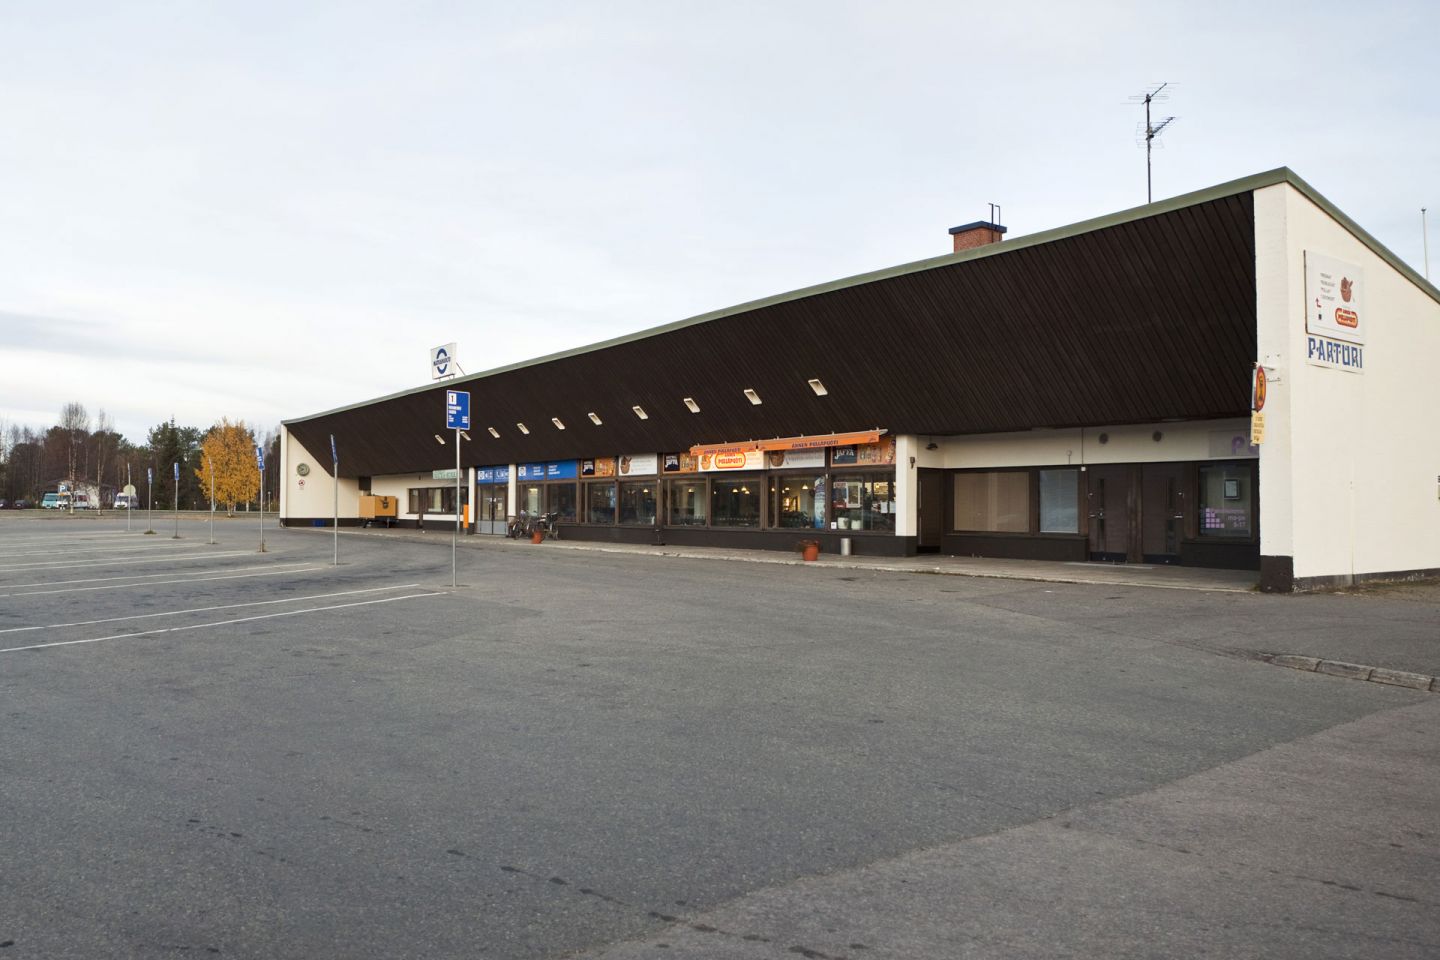 Bus station in Sodankylä, Finland